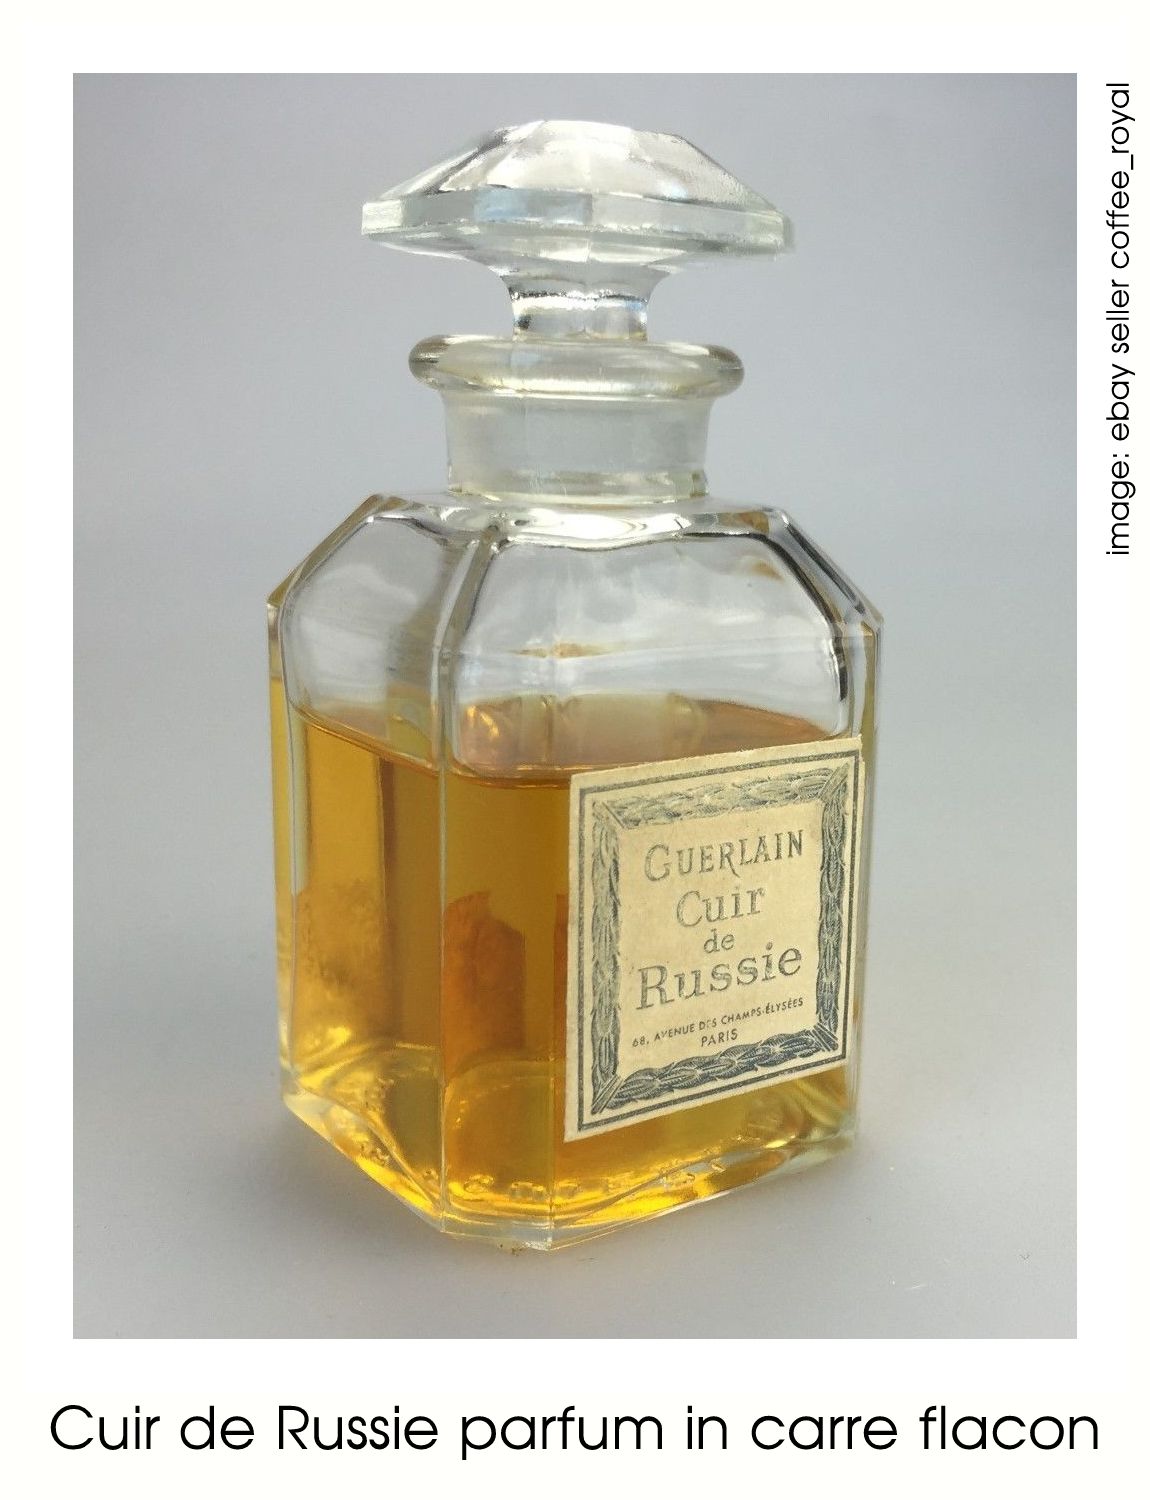 Guerlain Perfumes: Cuir de Russie by Guerlain c1875